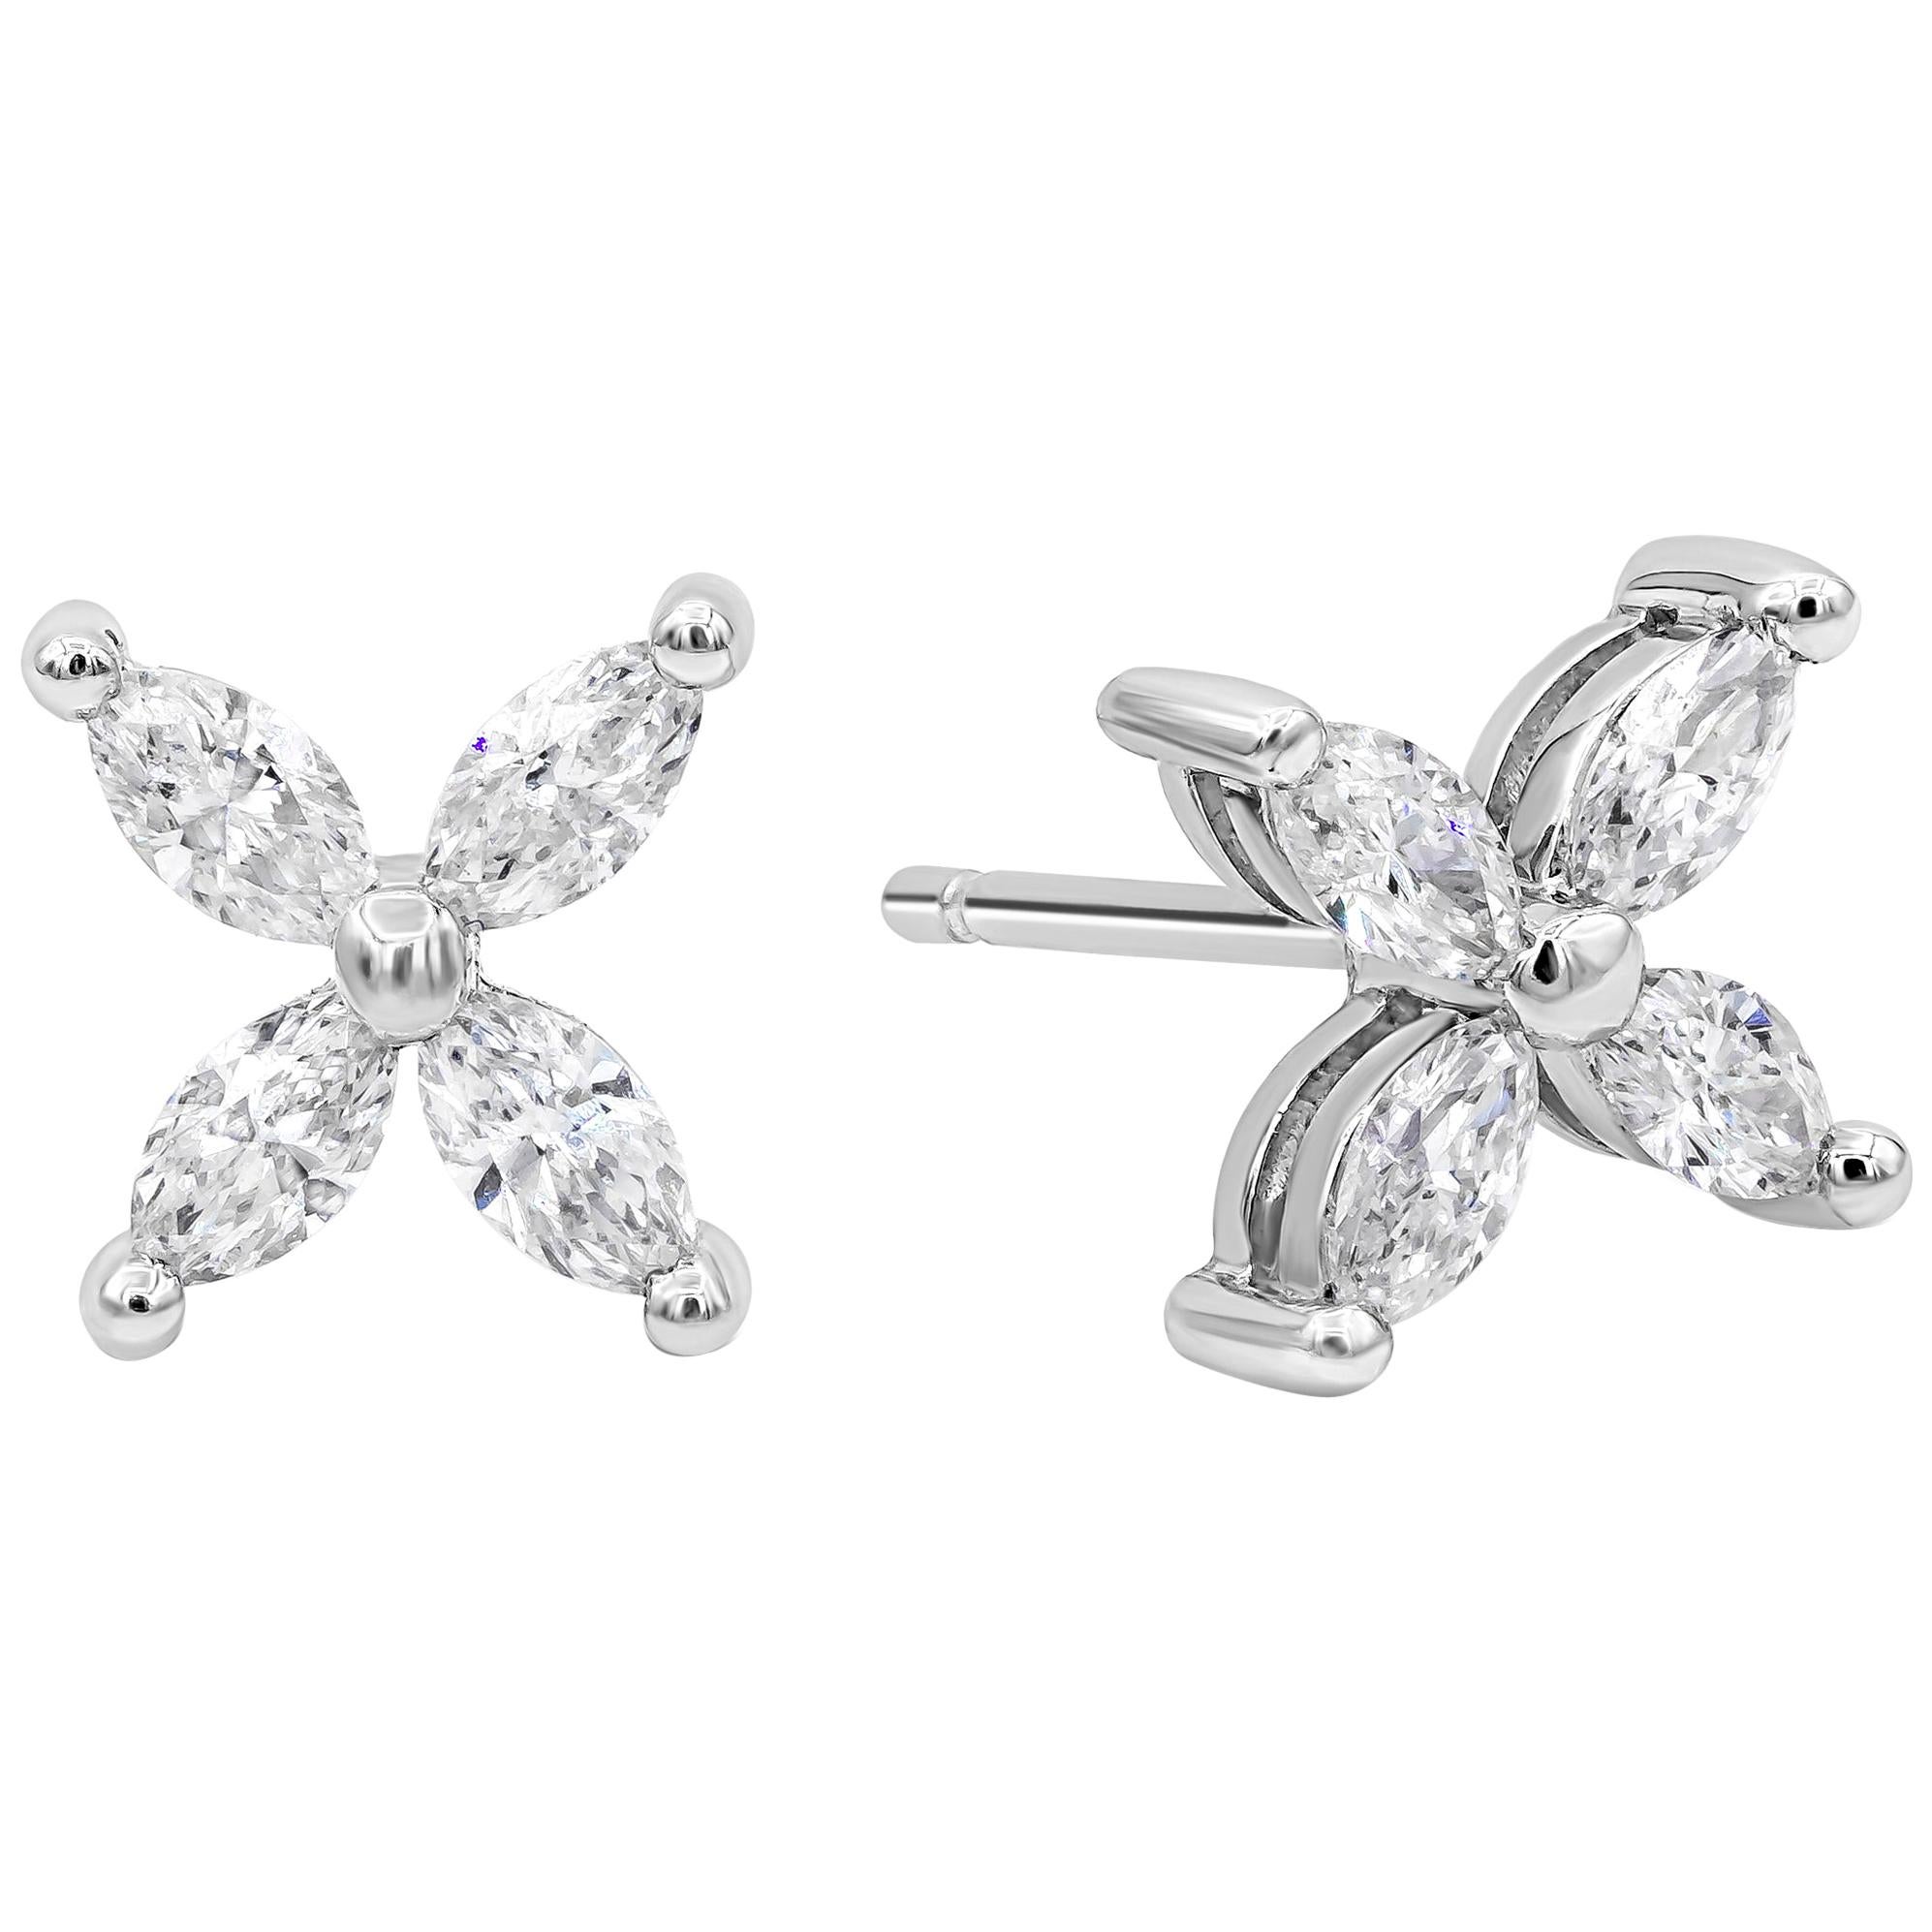 Roman Malakov 0.55 Carats Total Marquise Cut Diamond Cluster Stud Earrings